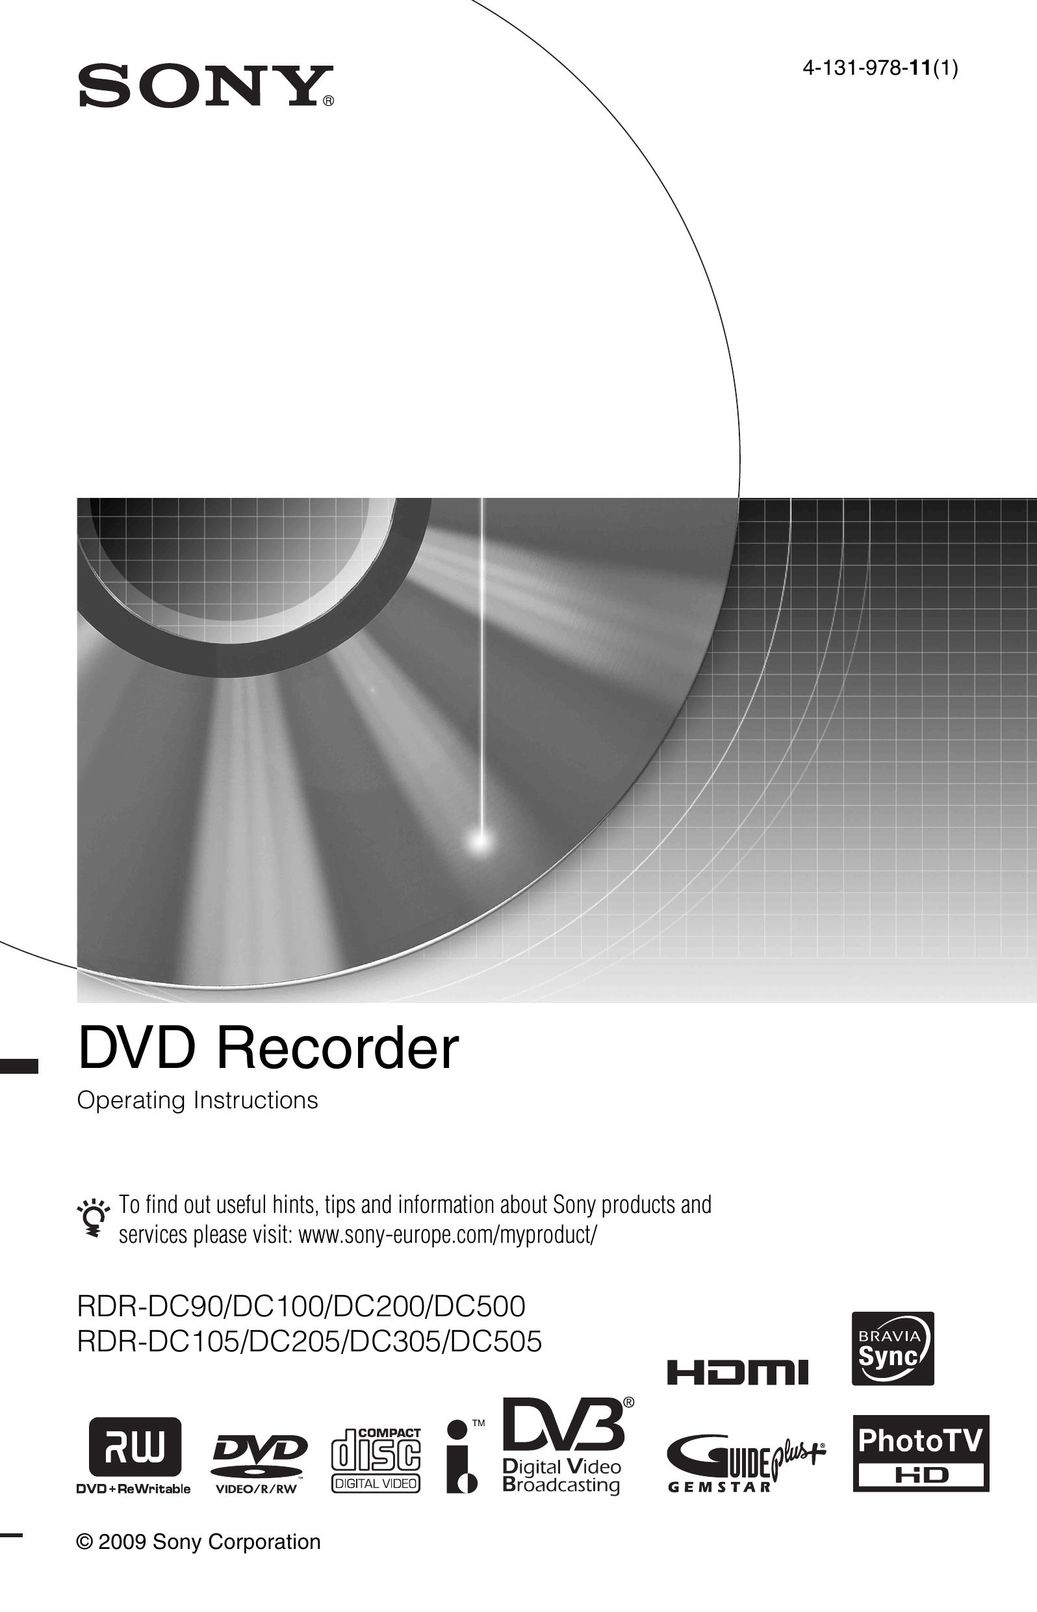 Sony RDR-DC200 DVD Recorder User Manual